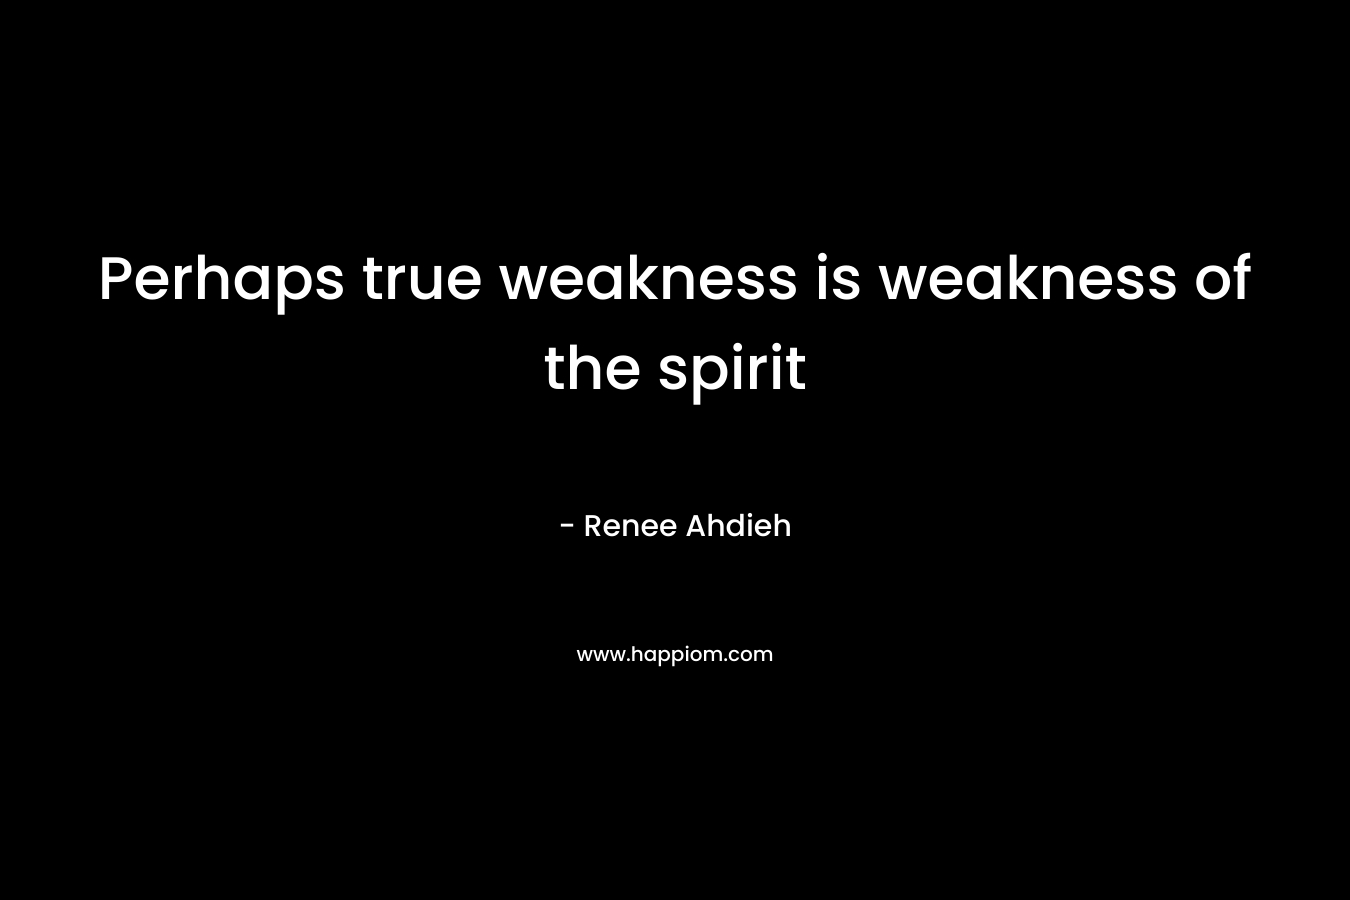 Perhaps true weakness is weakness of the spirit